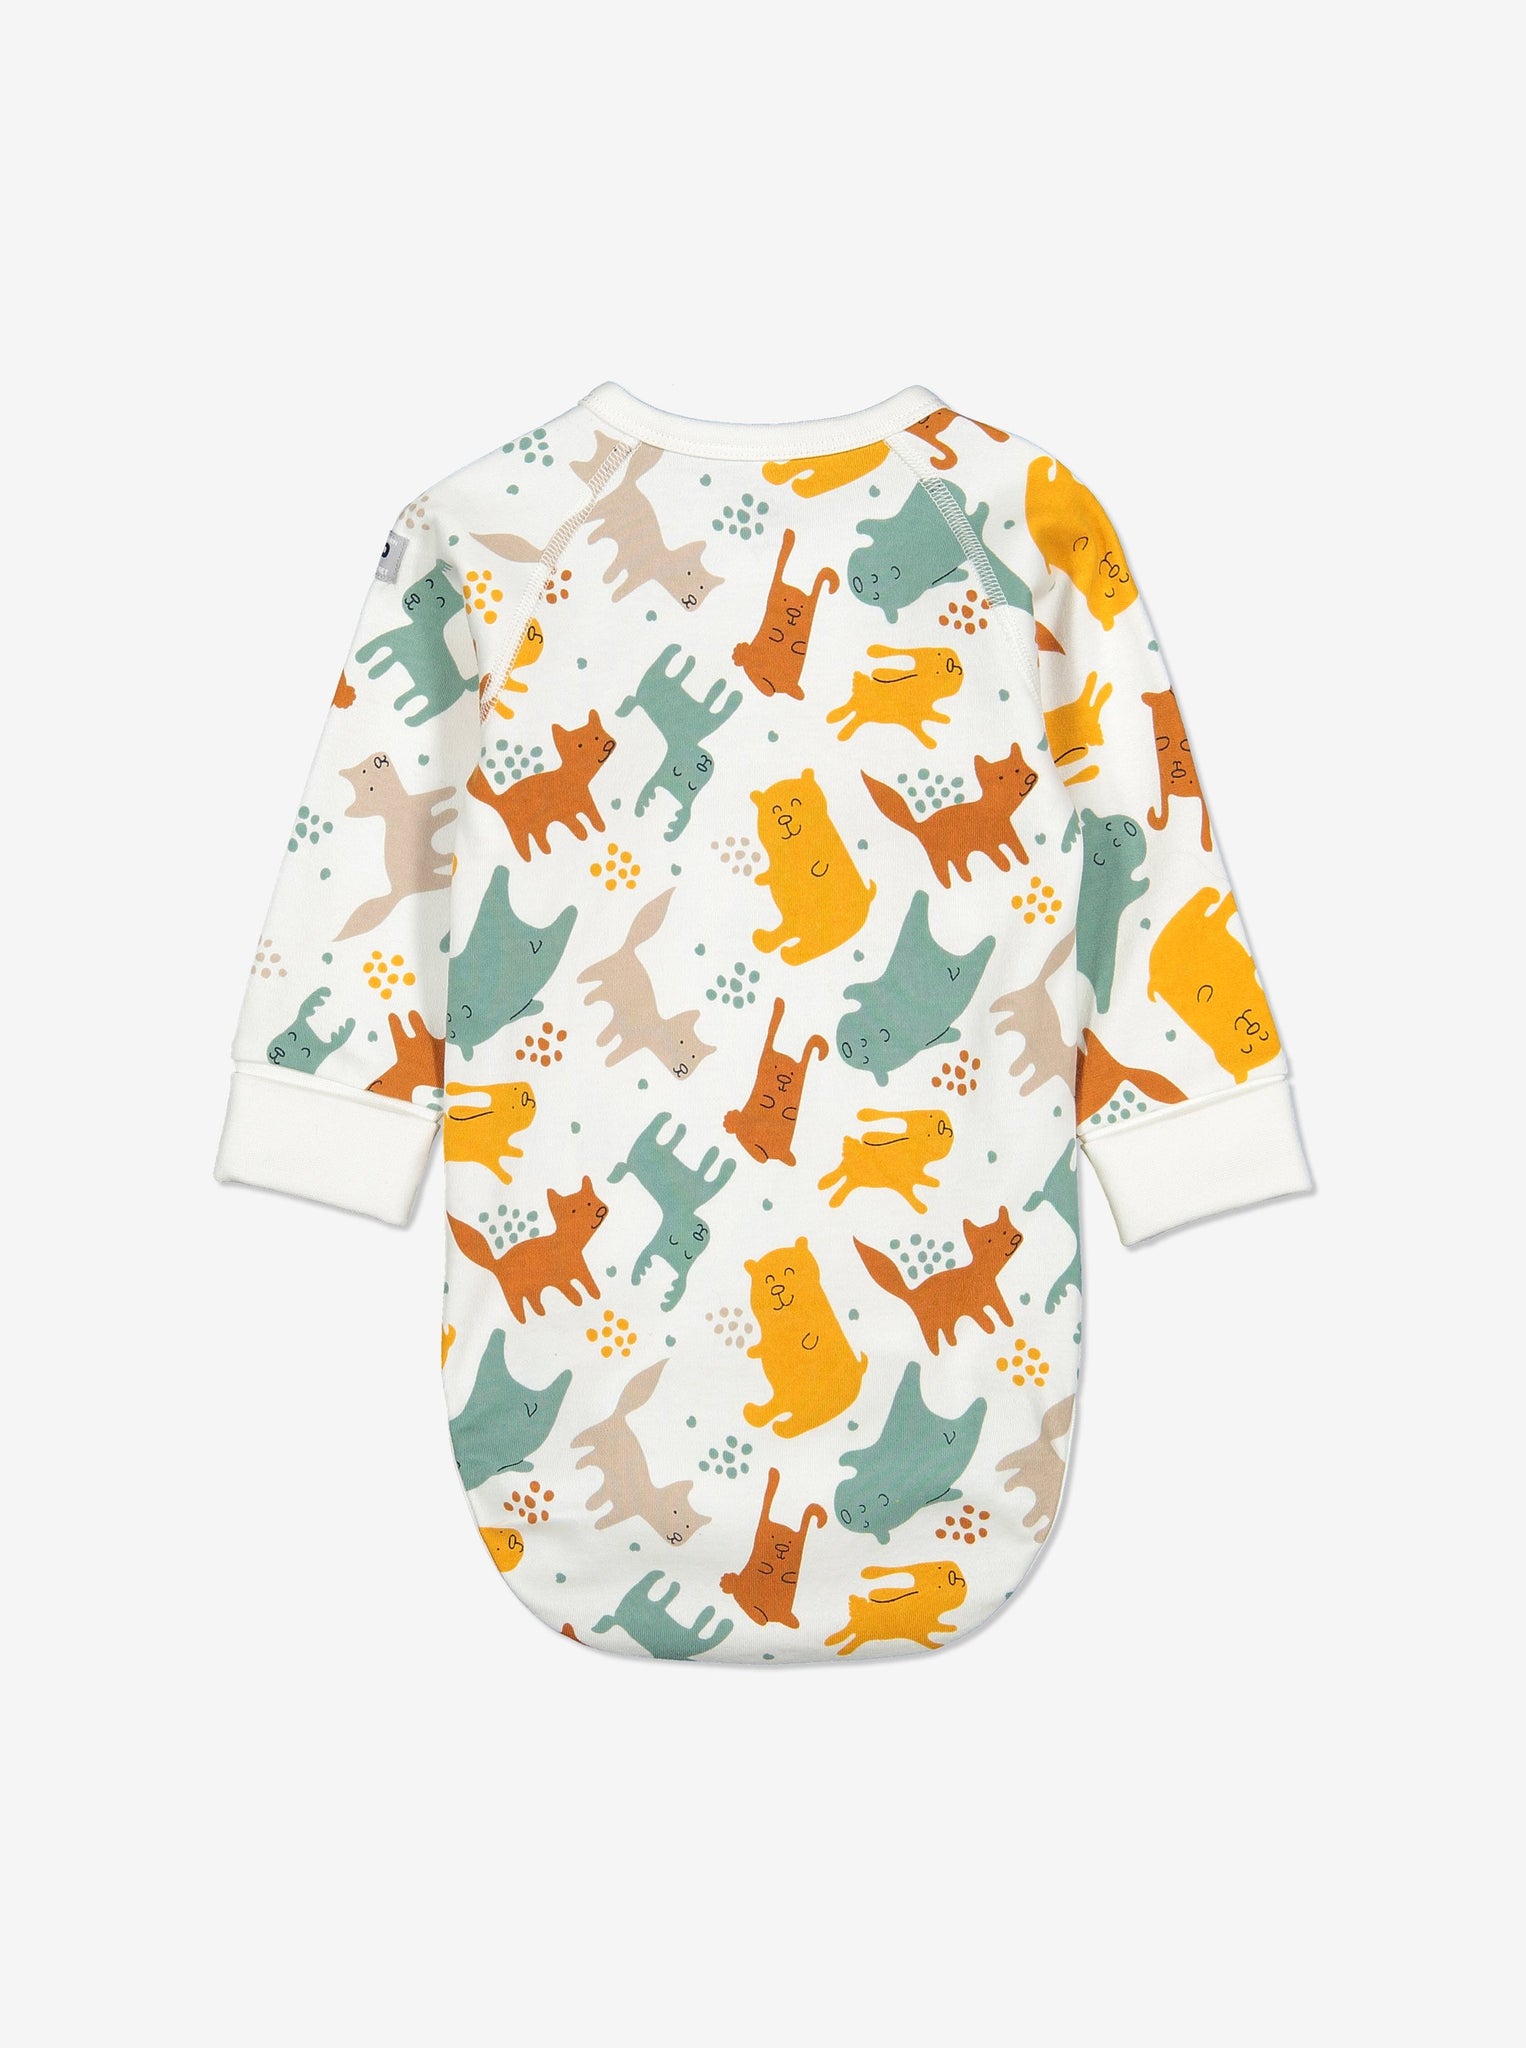 Nordic Animal Print Baby Bodysuit-Unisex-6m-1y-Natural